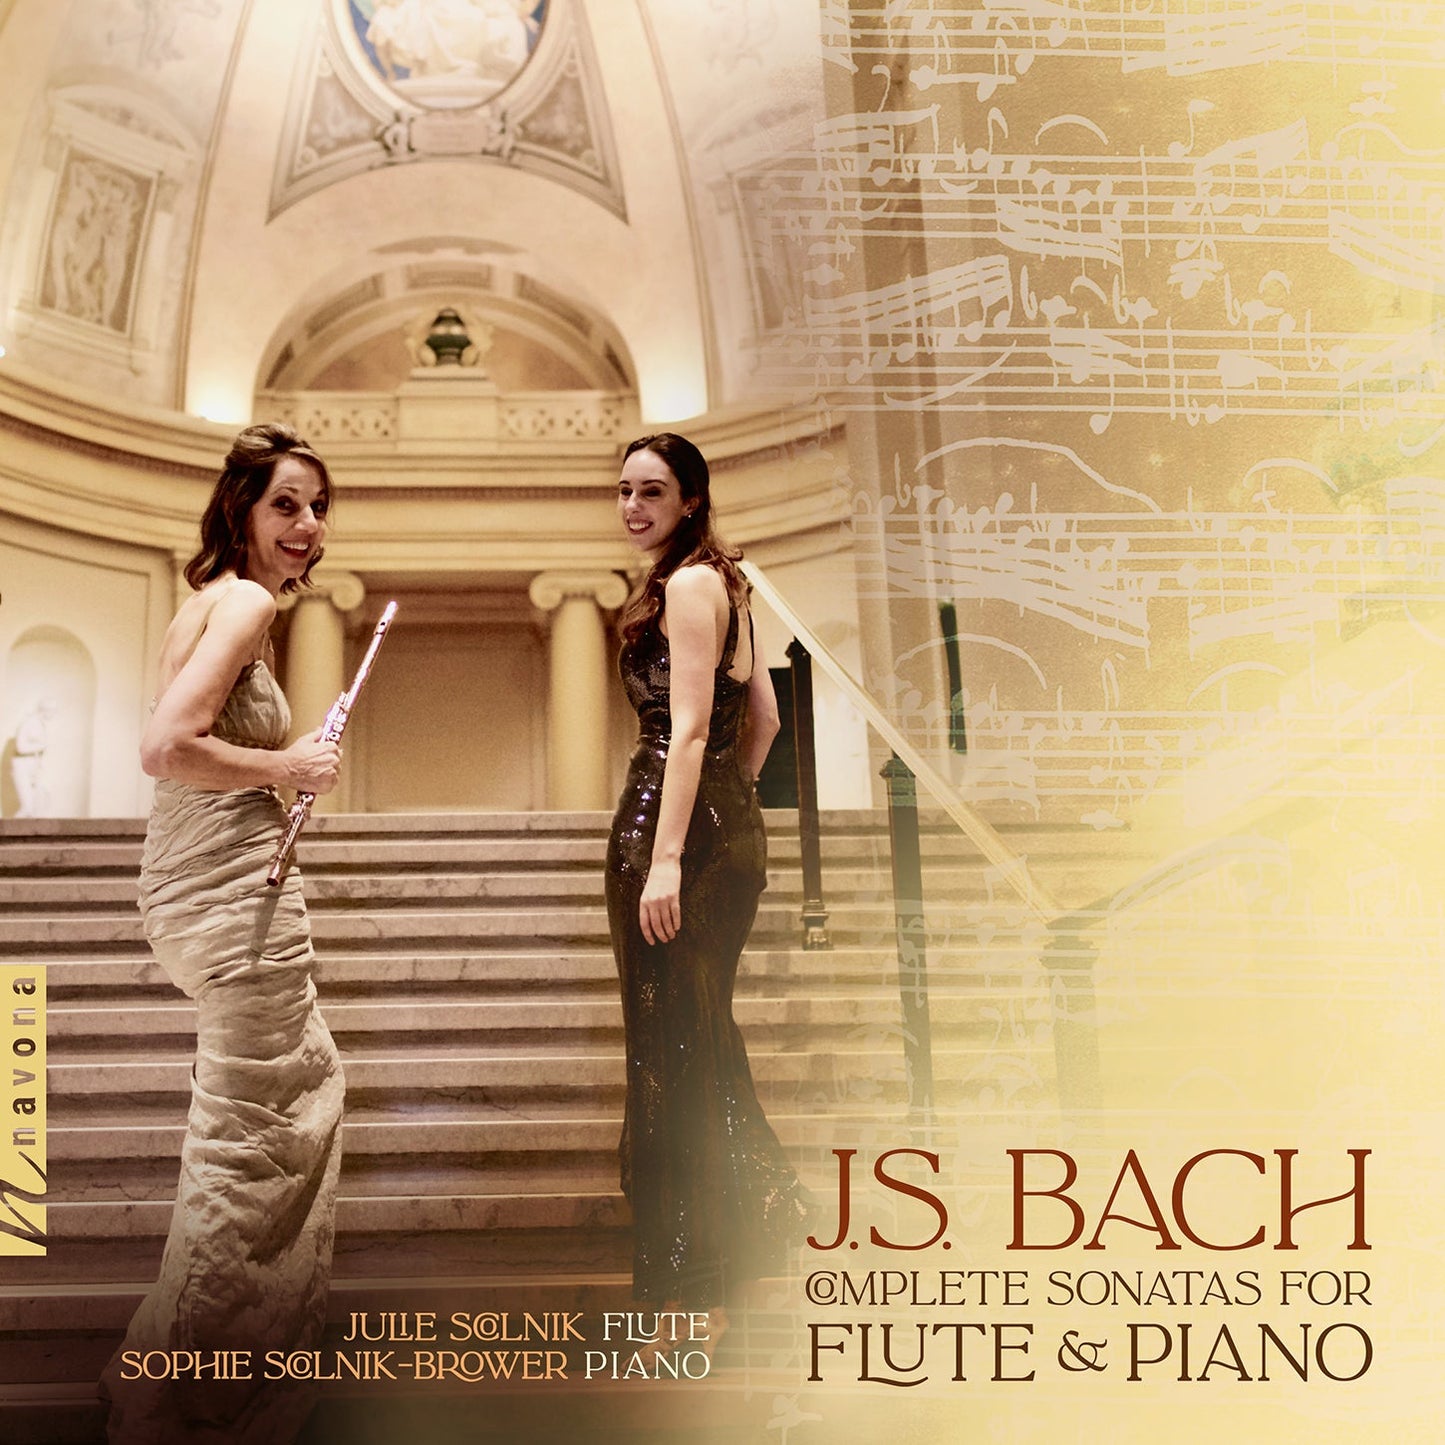 J.S. Bach: Complete Sonatas For Flute & Piano